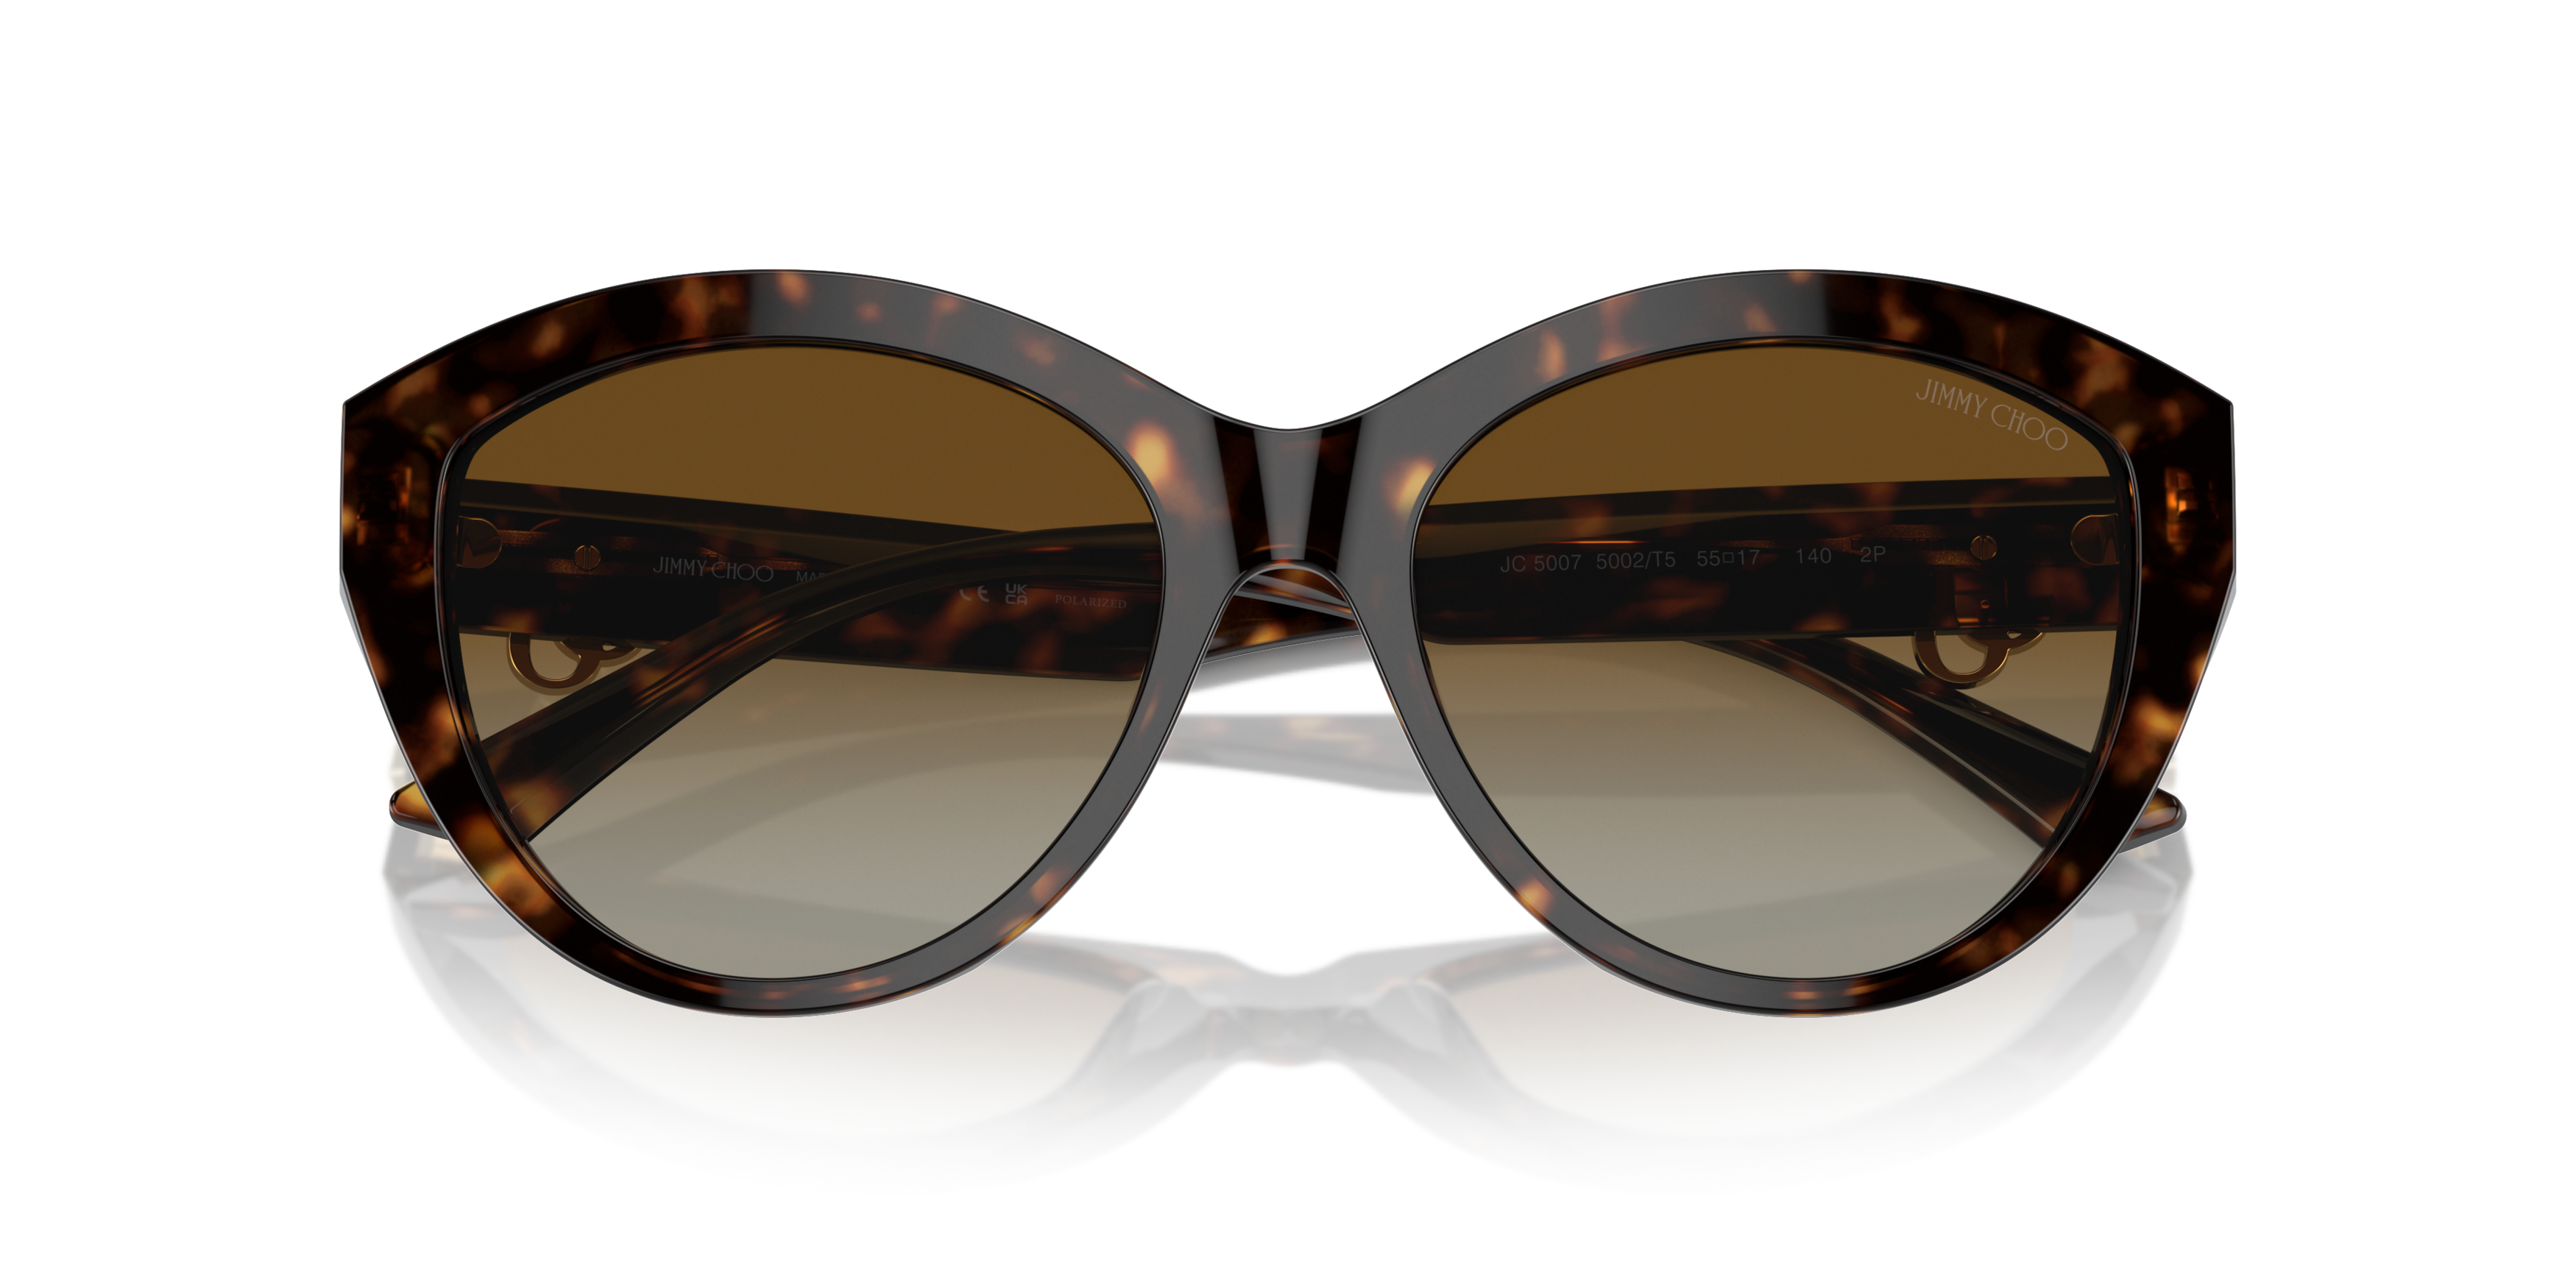 [products.image.folded] Jimmy Choo JC5007 Sunglasses